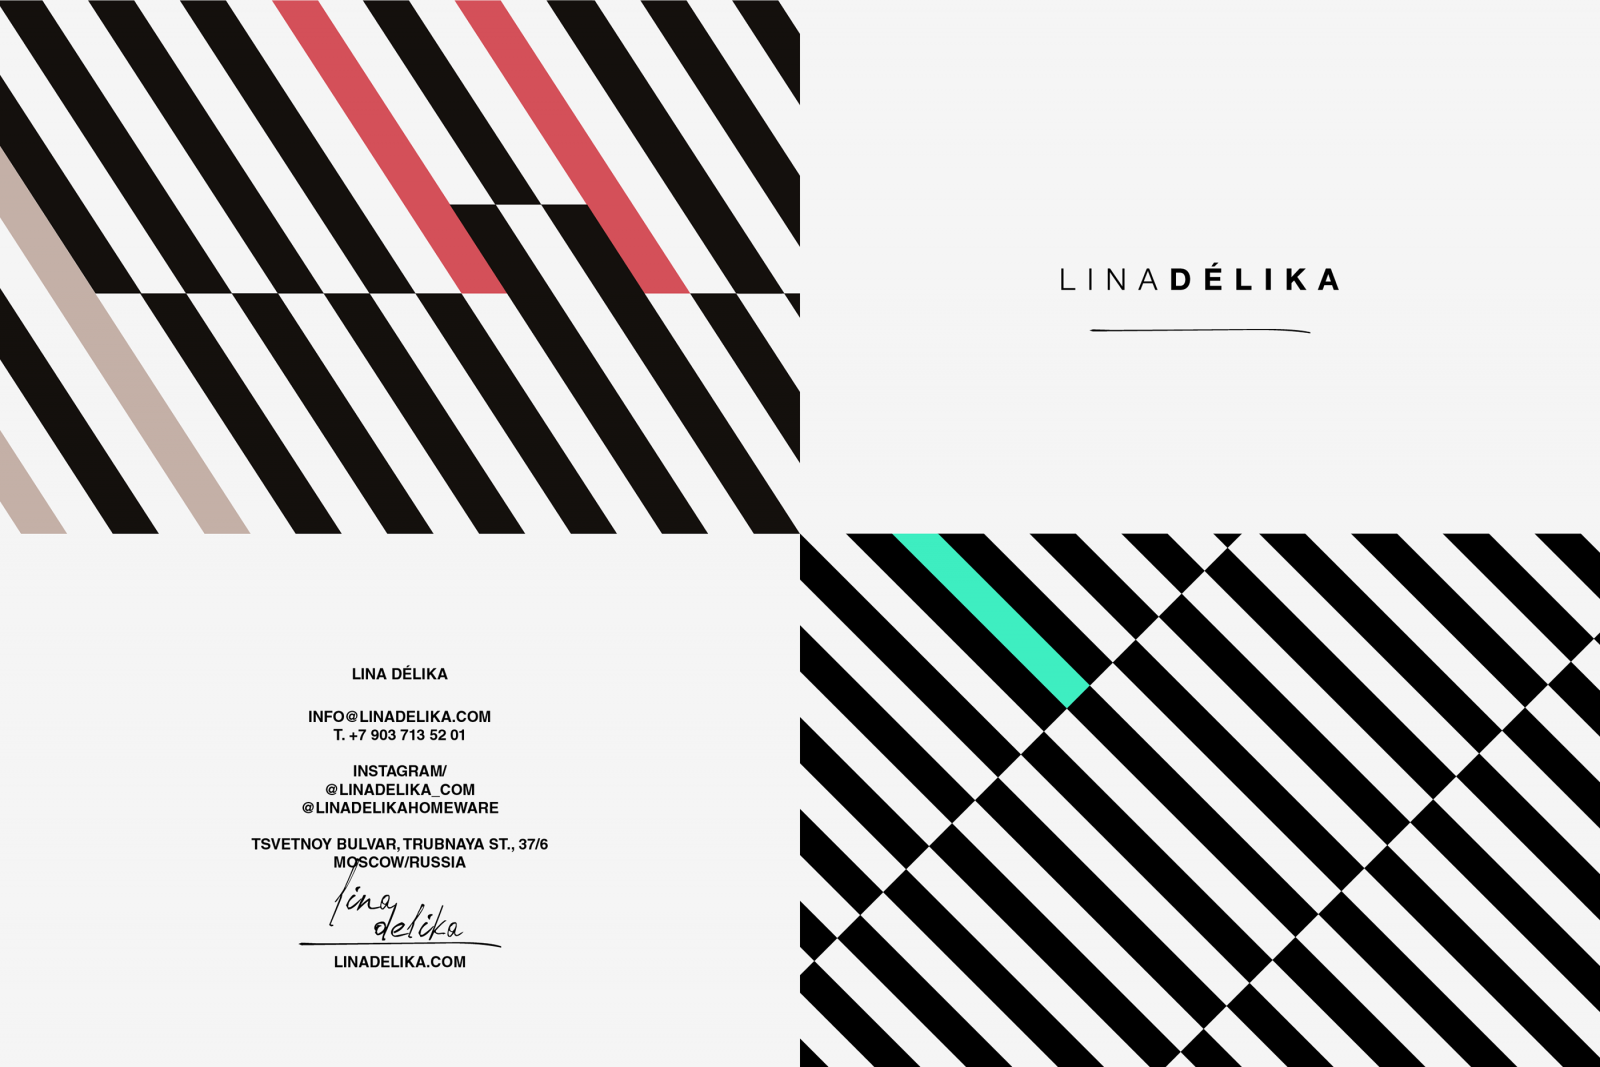 Linadélika Lifestyle Brand Identity by Radmir Volk